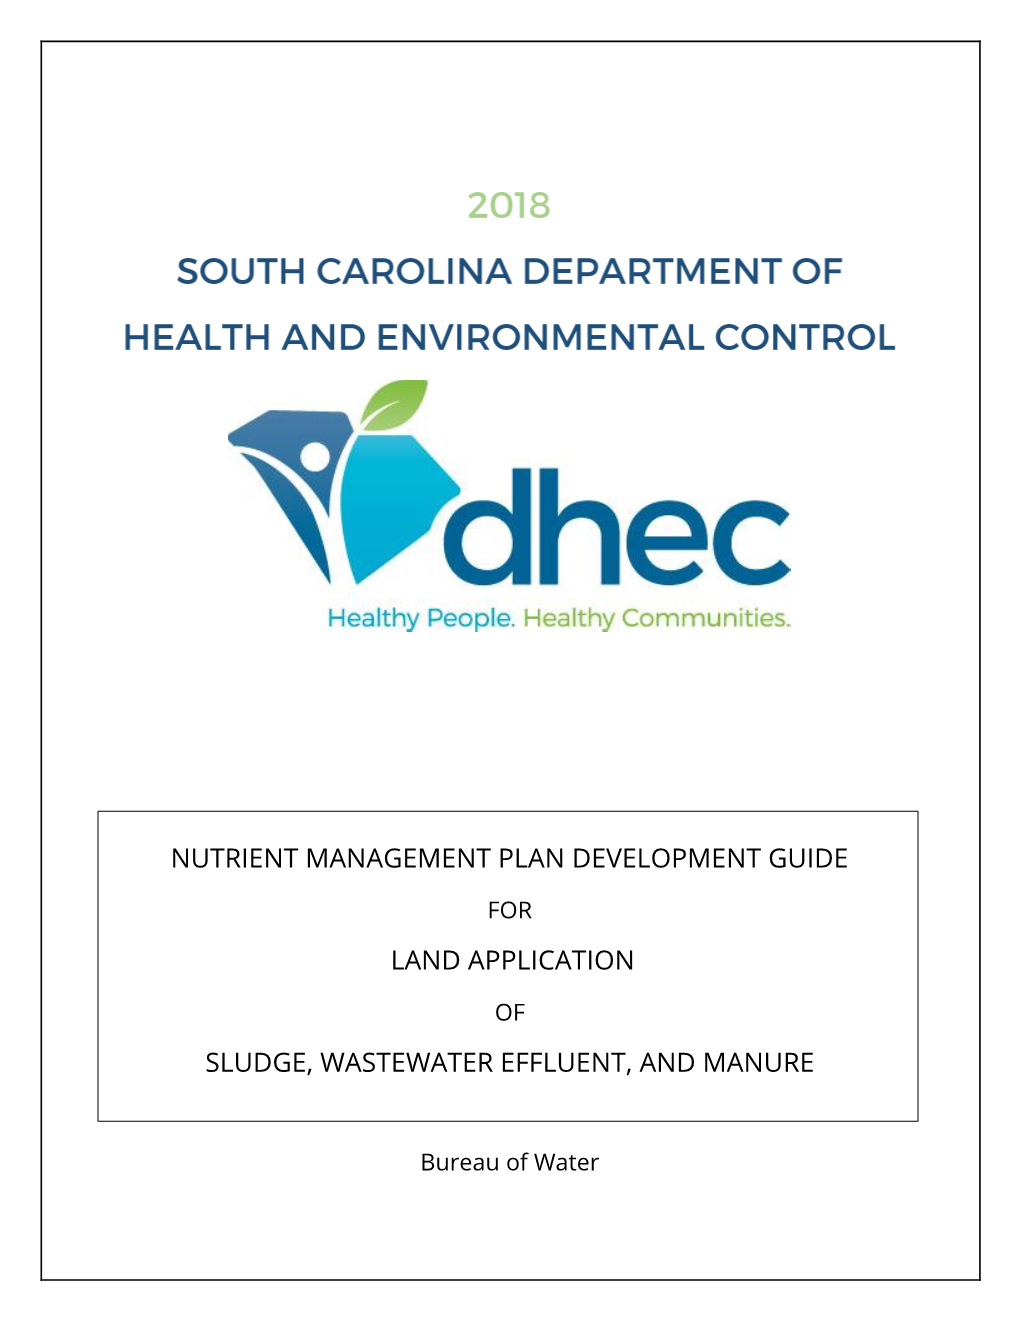 Nutrient Management Plan Development Guide